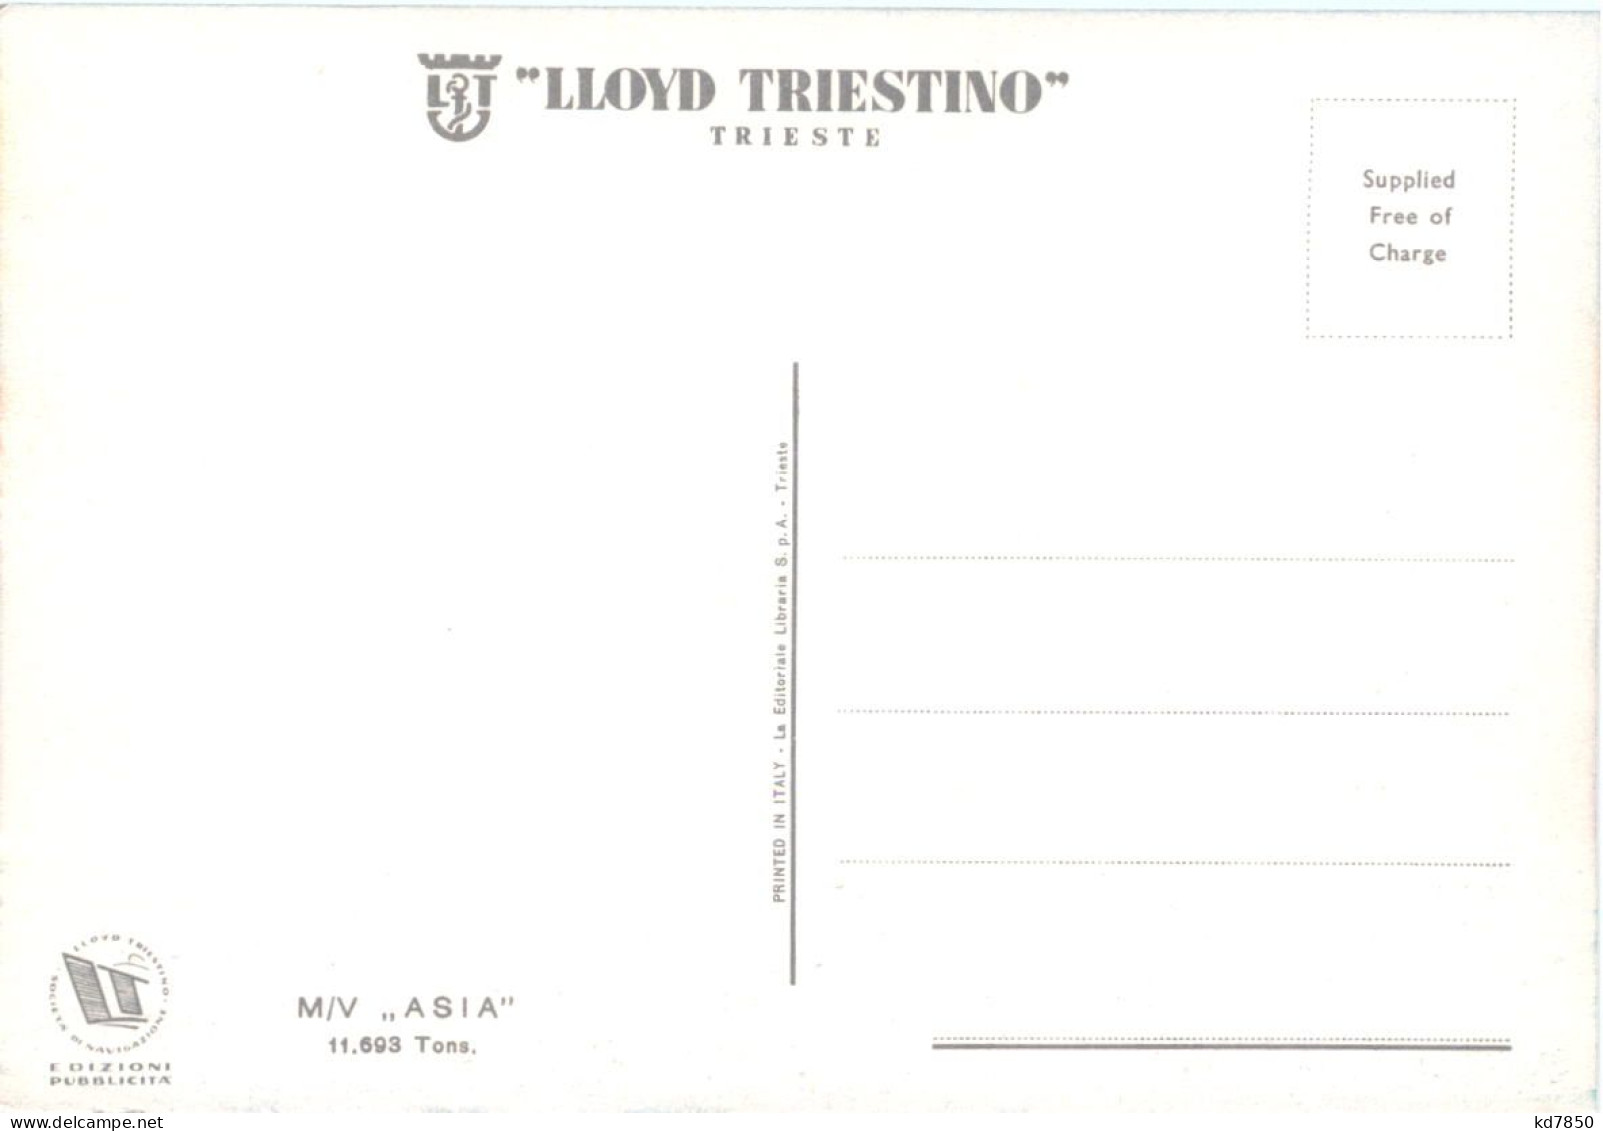 Lloyd Triestino - MN Asia - Paquebote